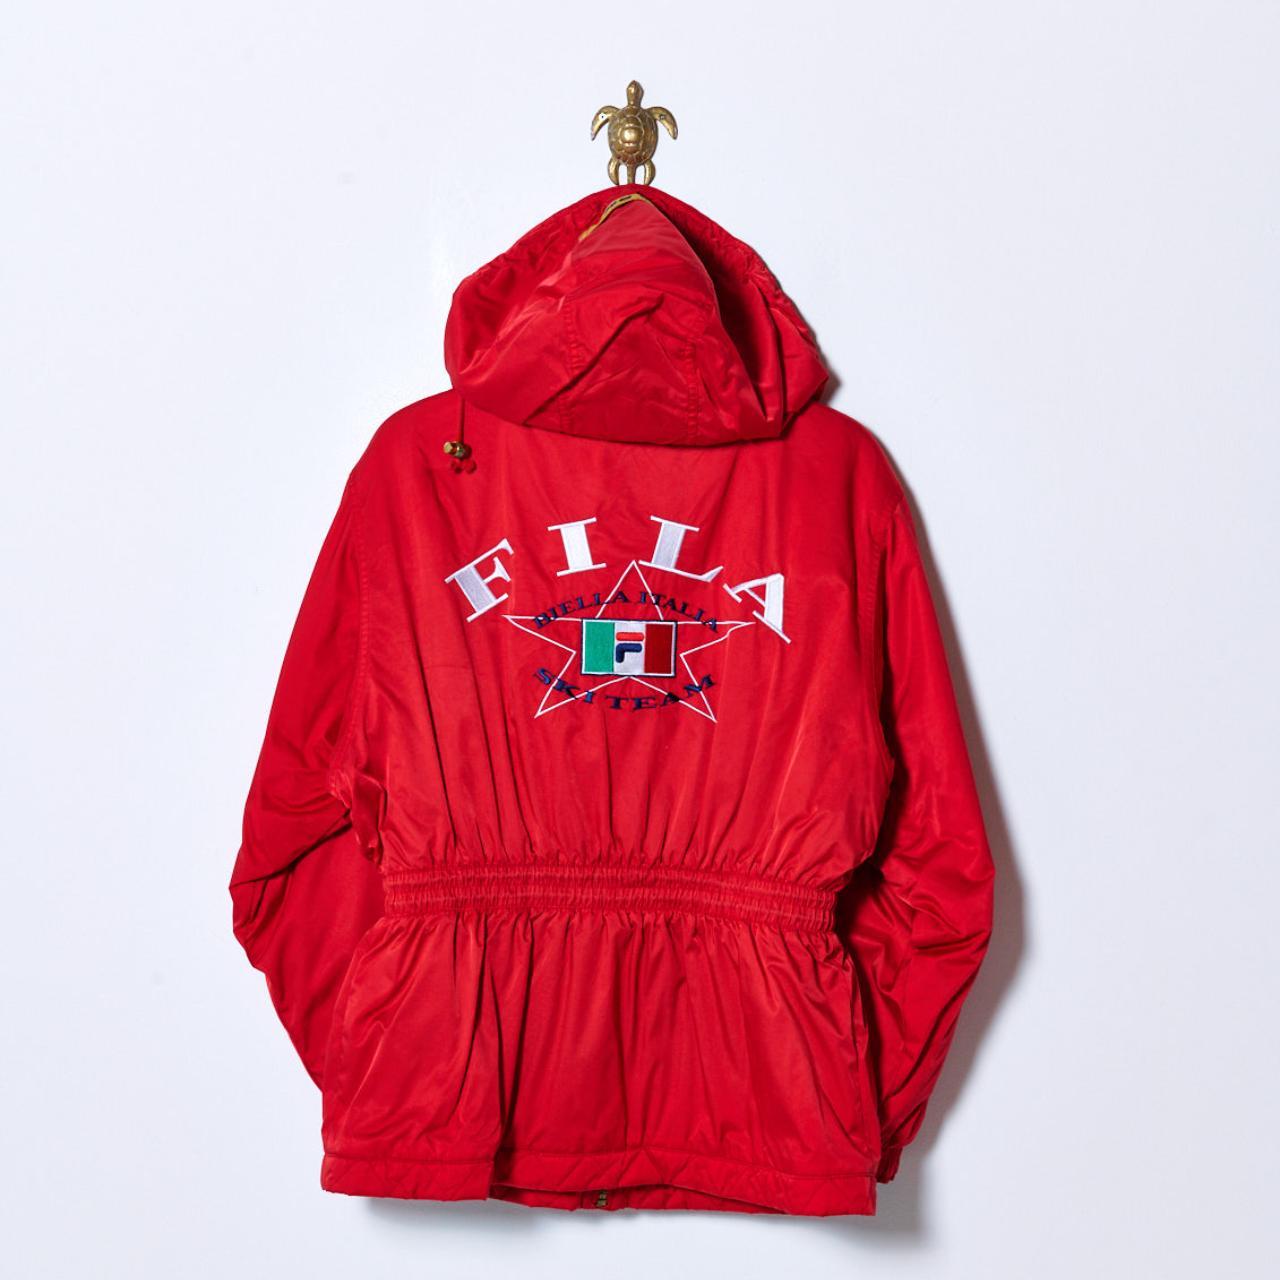 Fila Men's Red Jacket | Depop